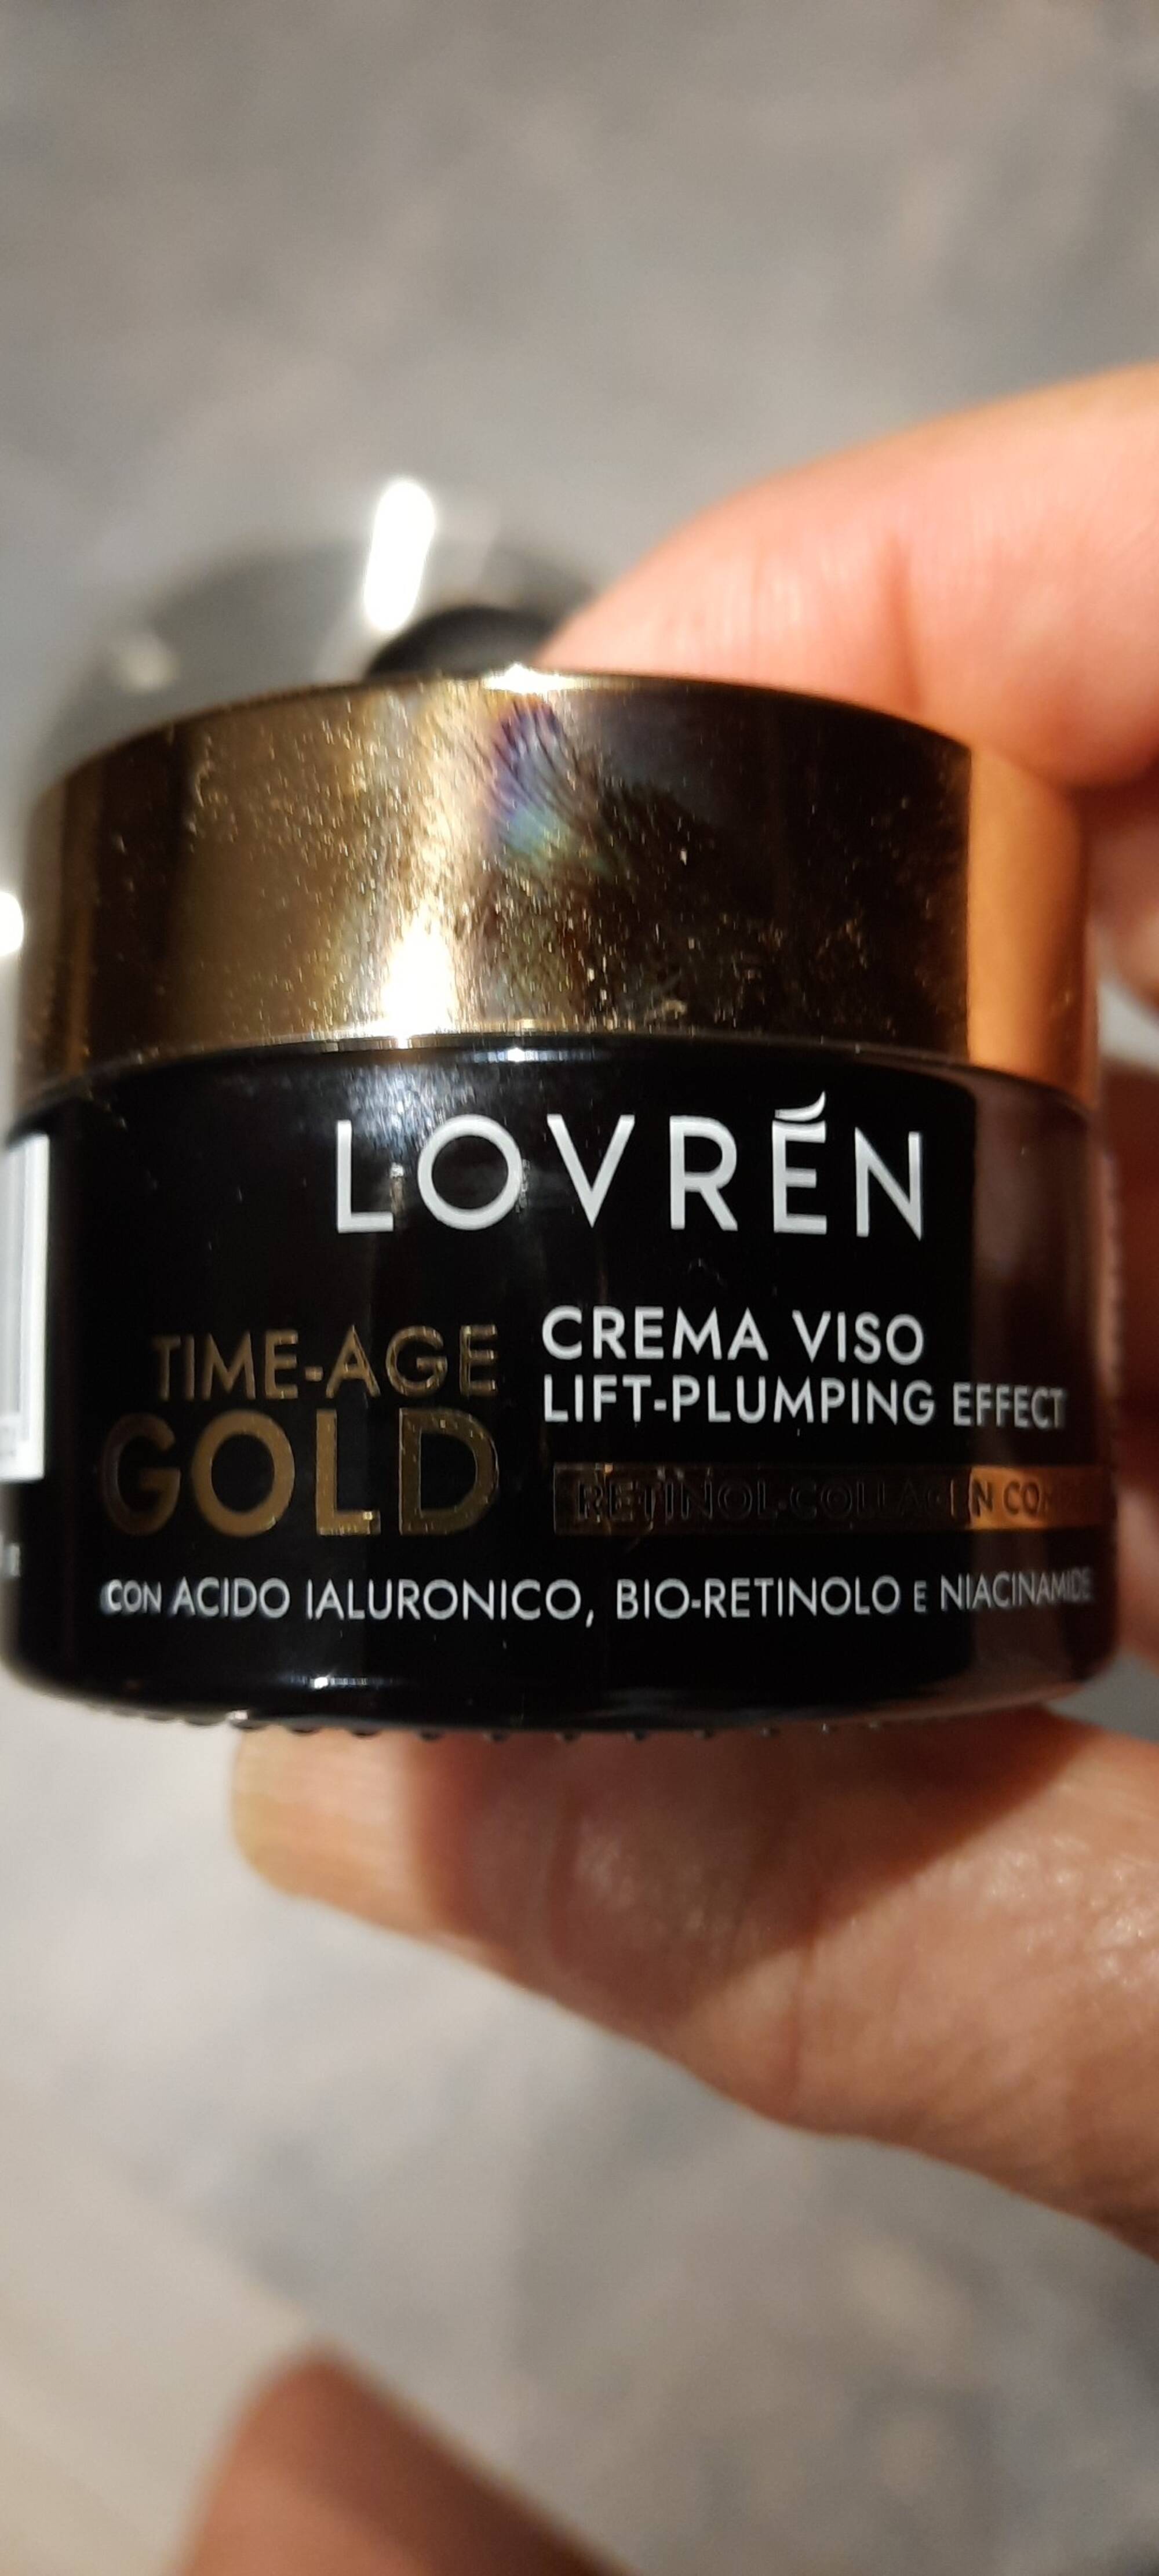 LOVREN - Gold time age - Creme viso